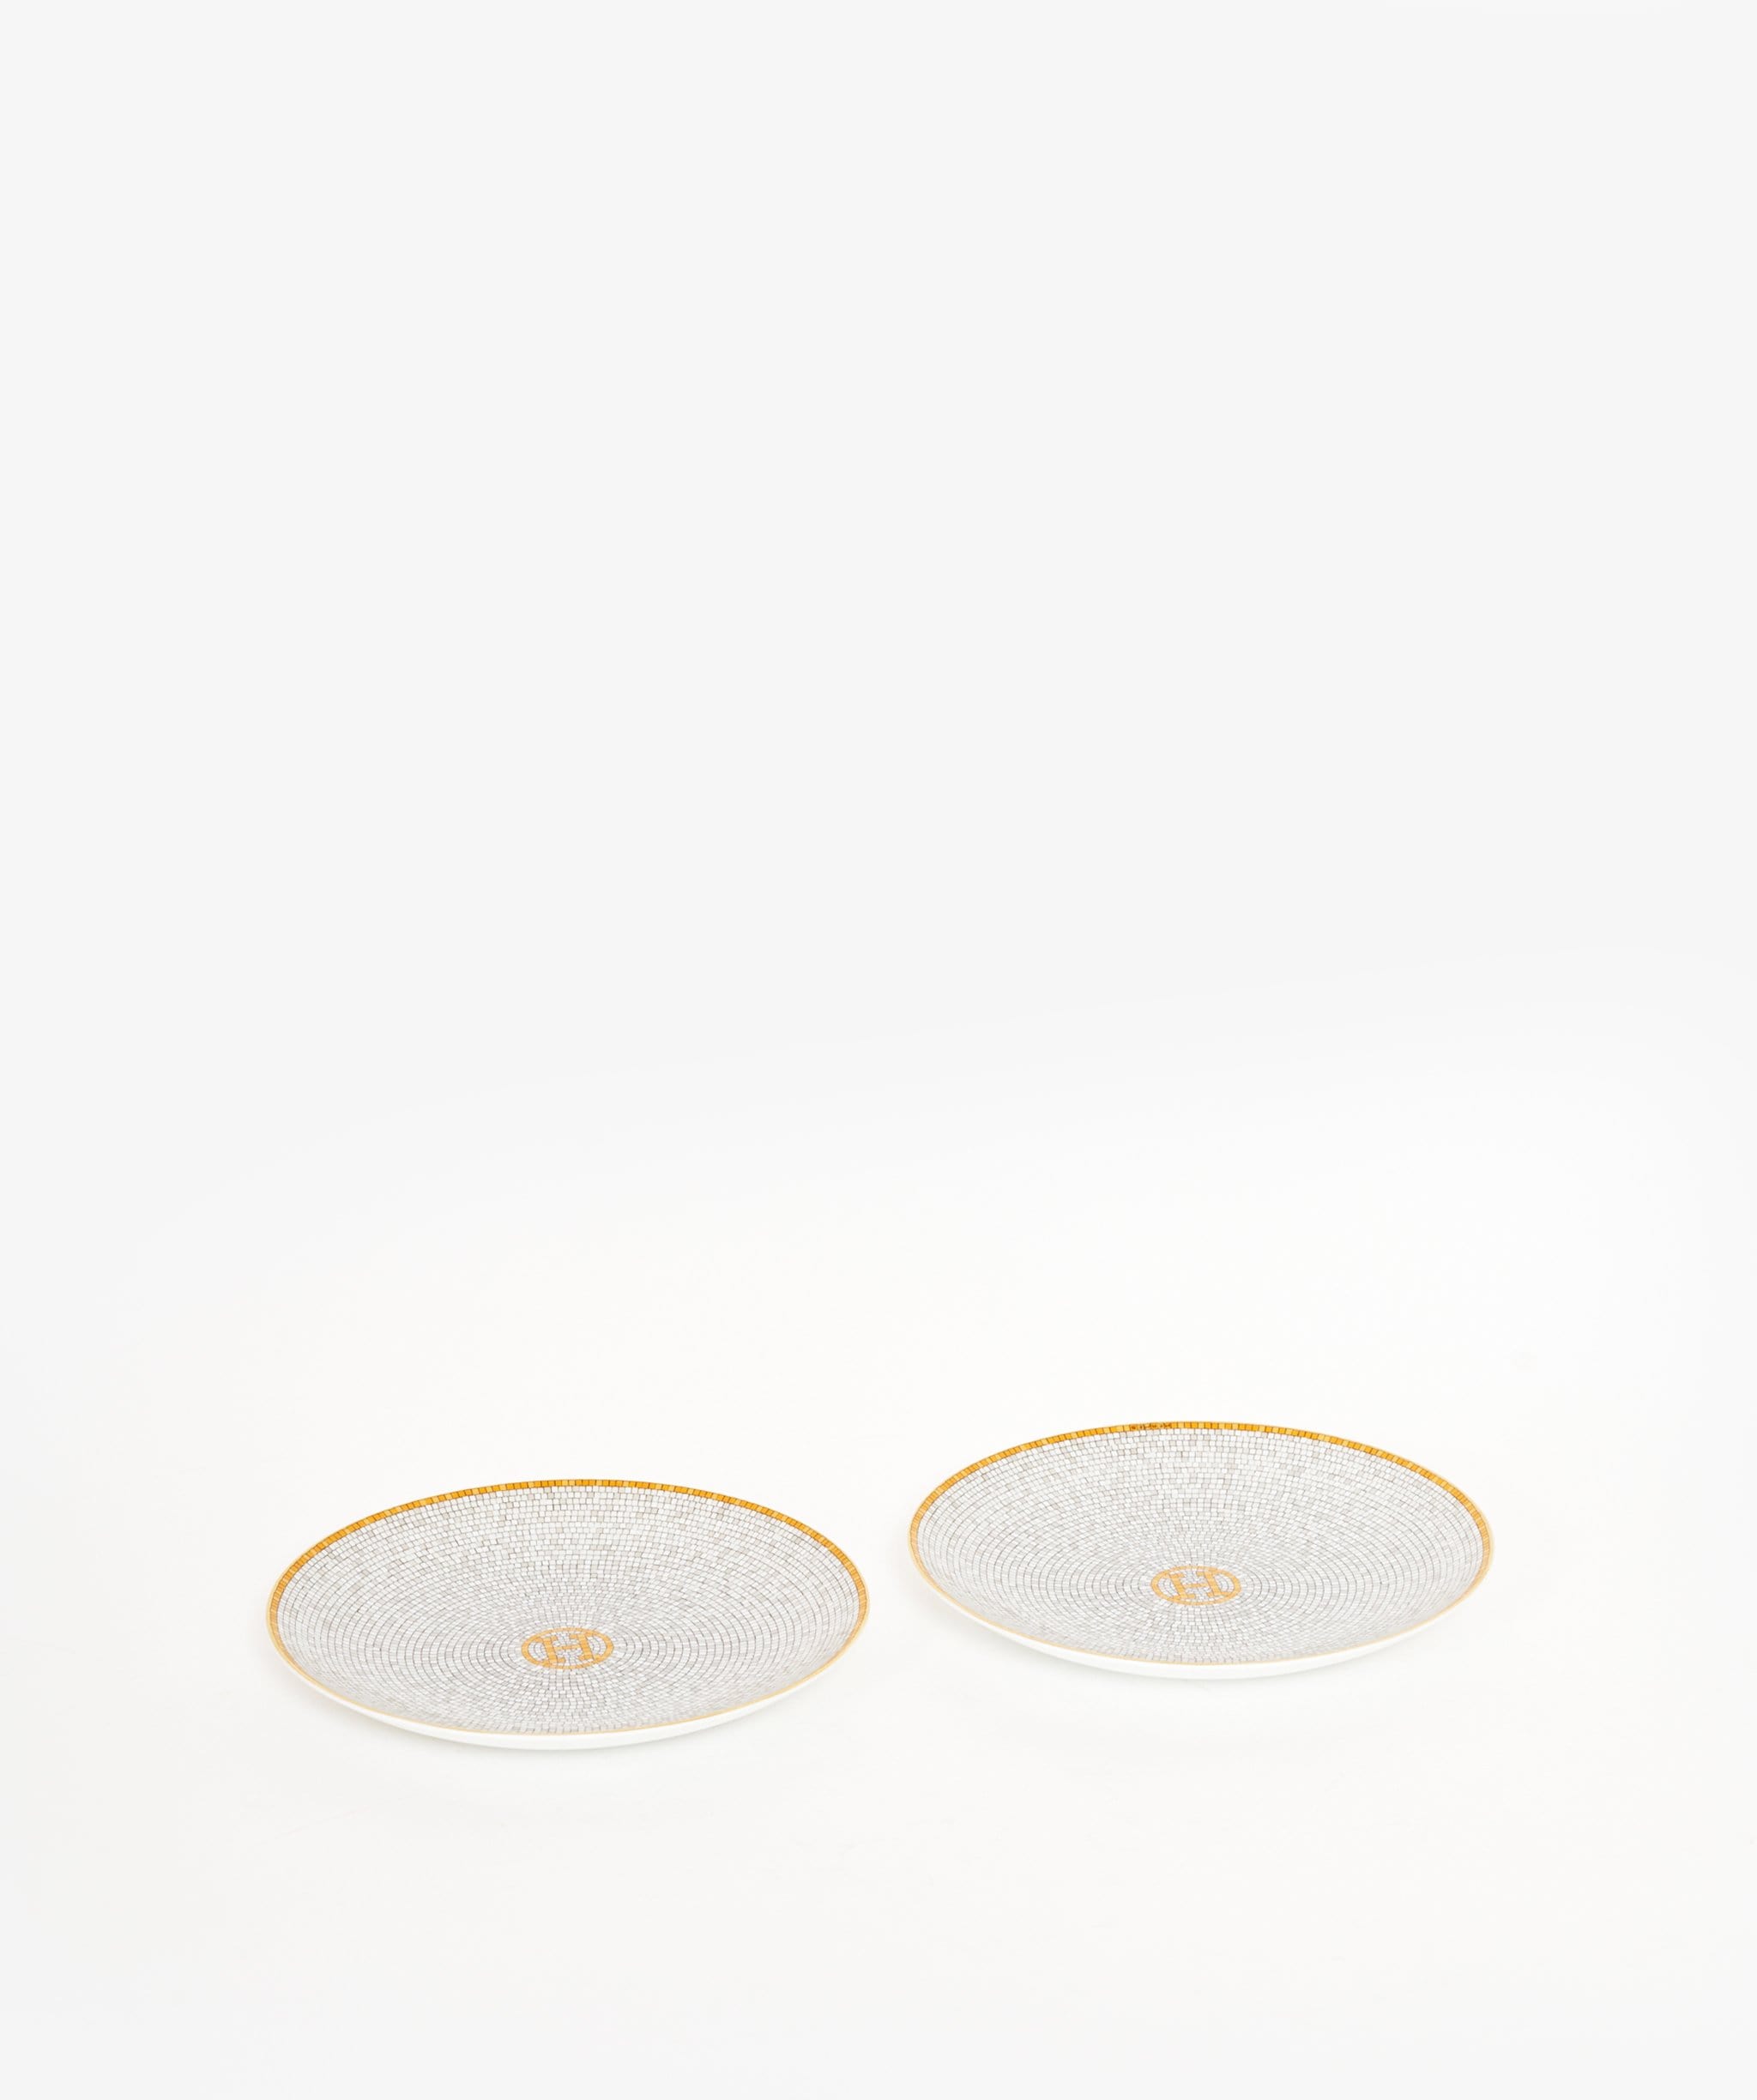 Hermès Hermes Mosaique au 24 bread and butter plate set includes two plates